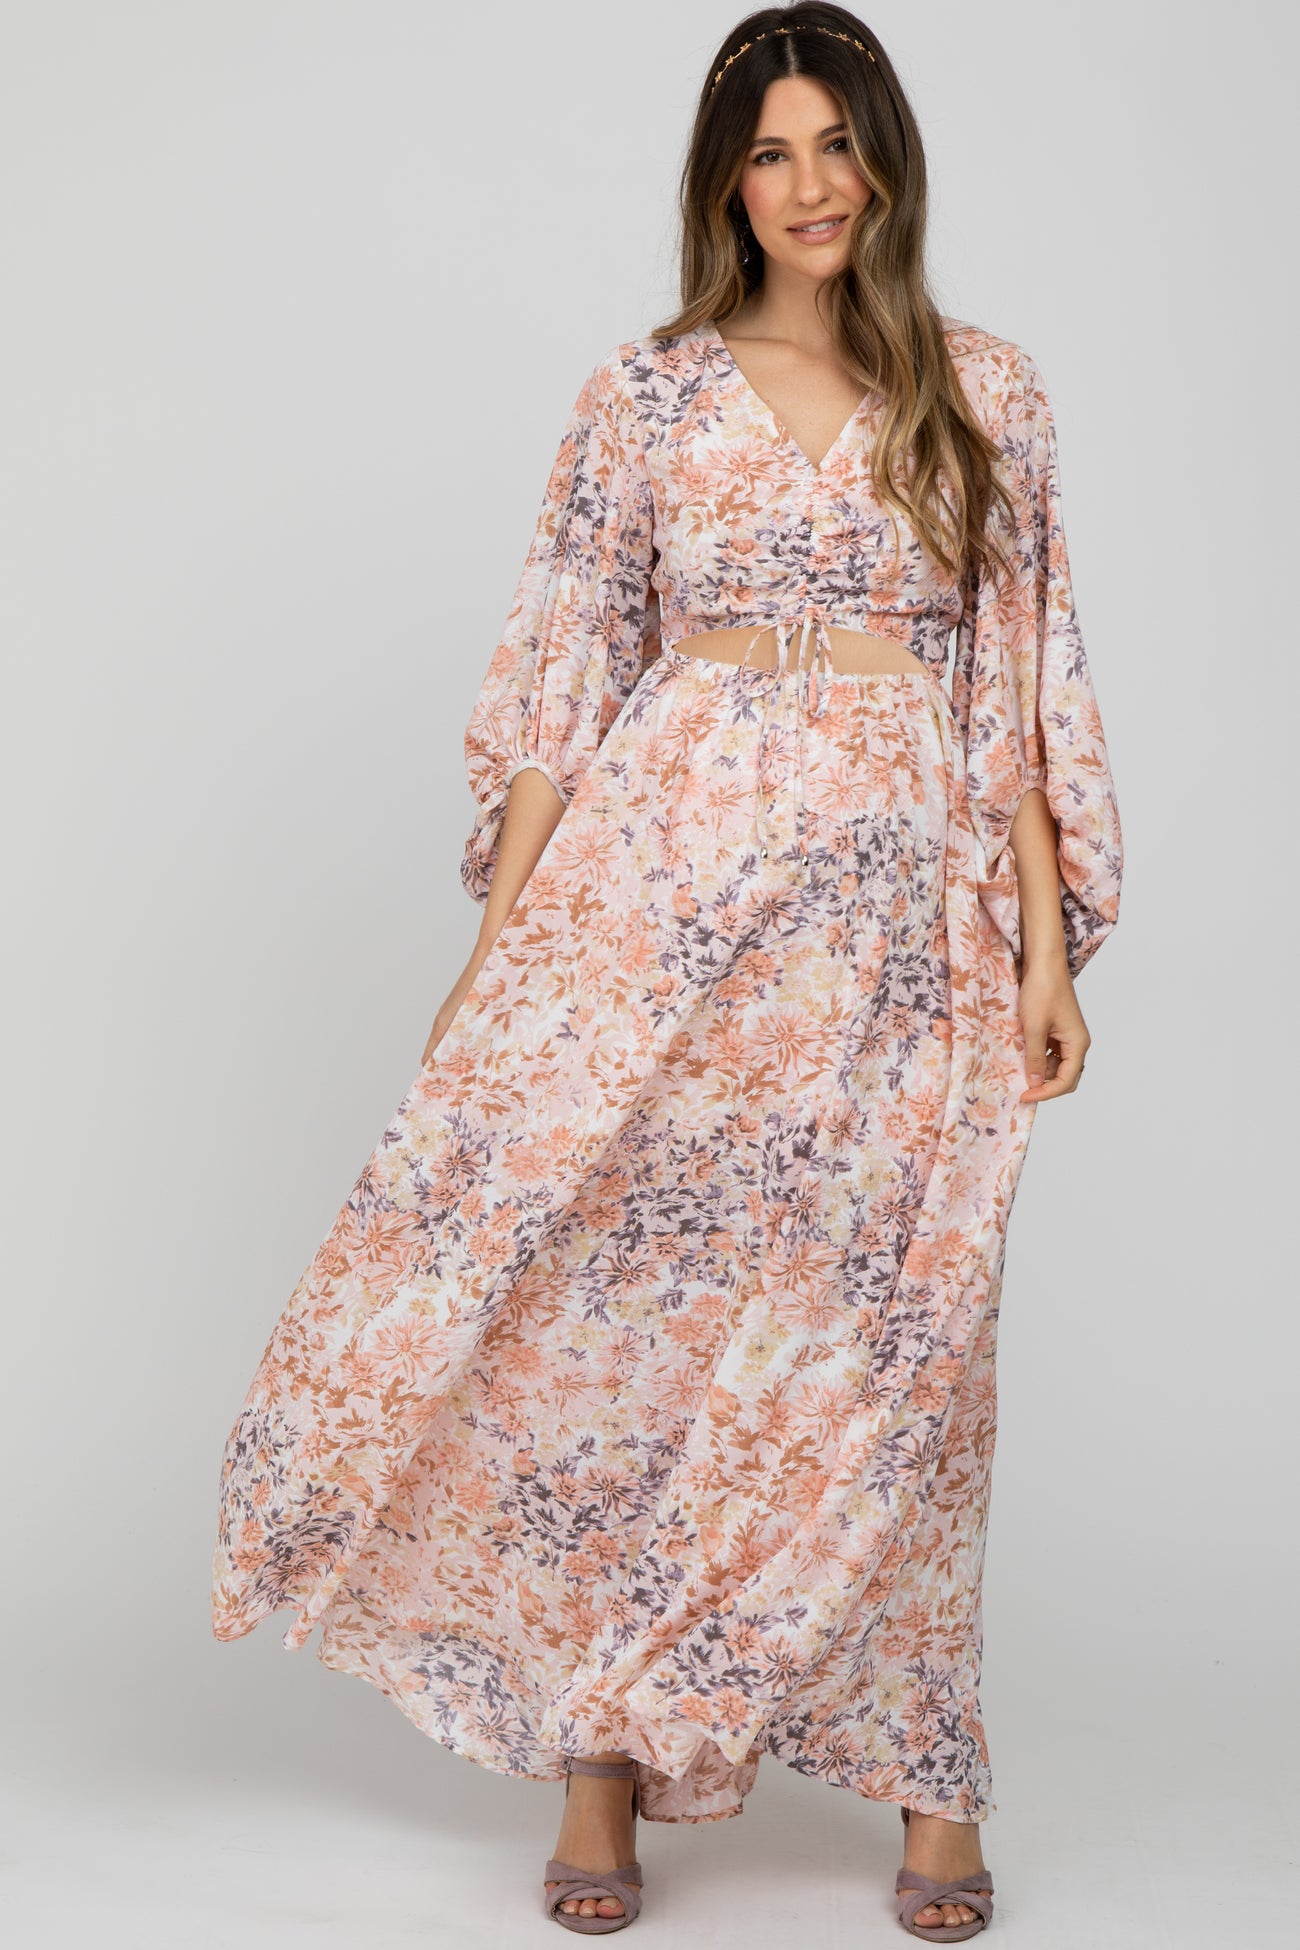 Peach Floral Front Cutout Maternity Maxi Dress – PinkBlush